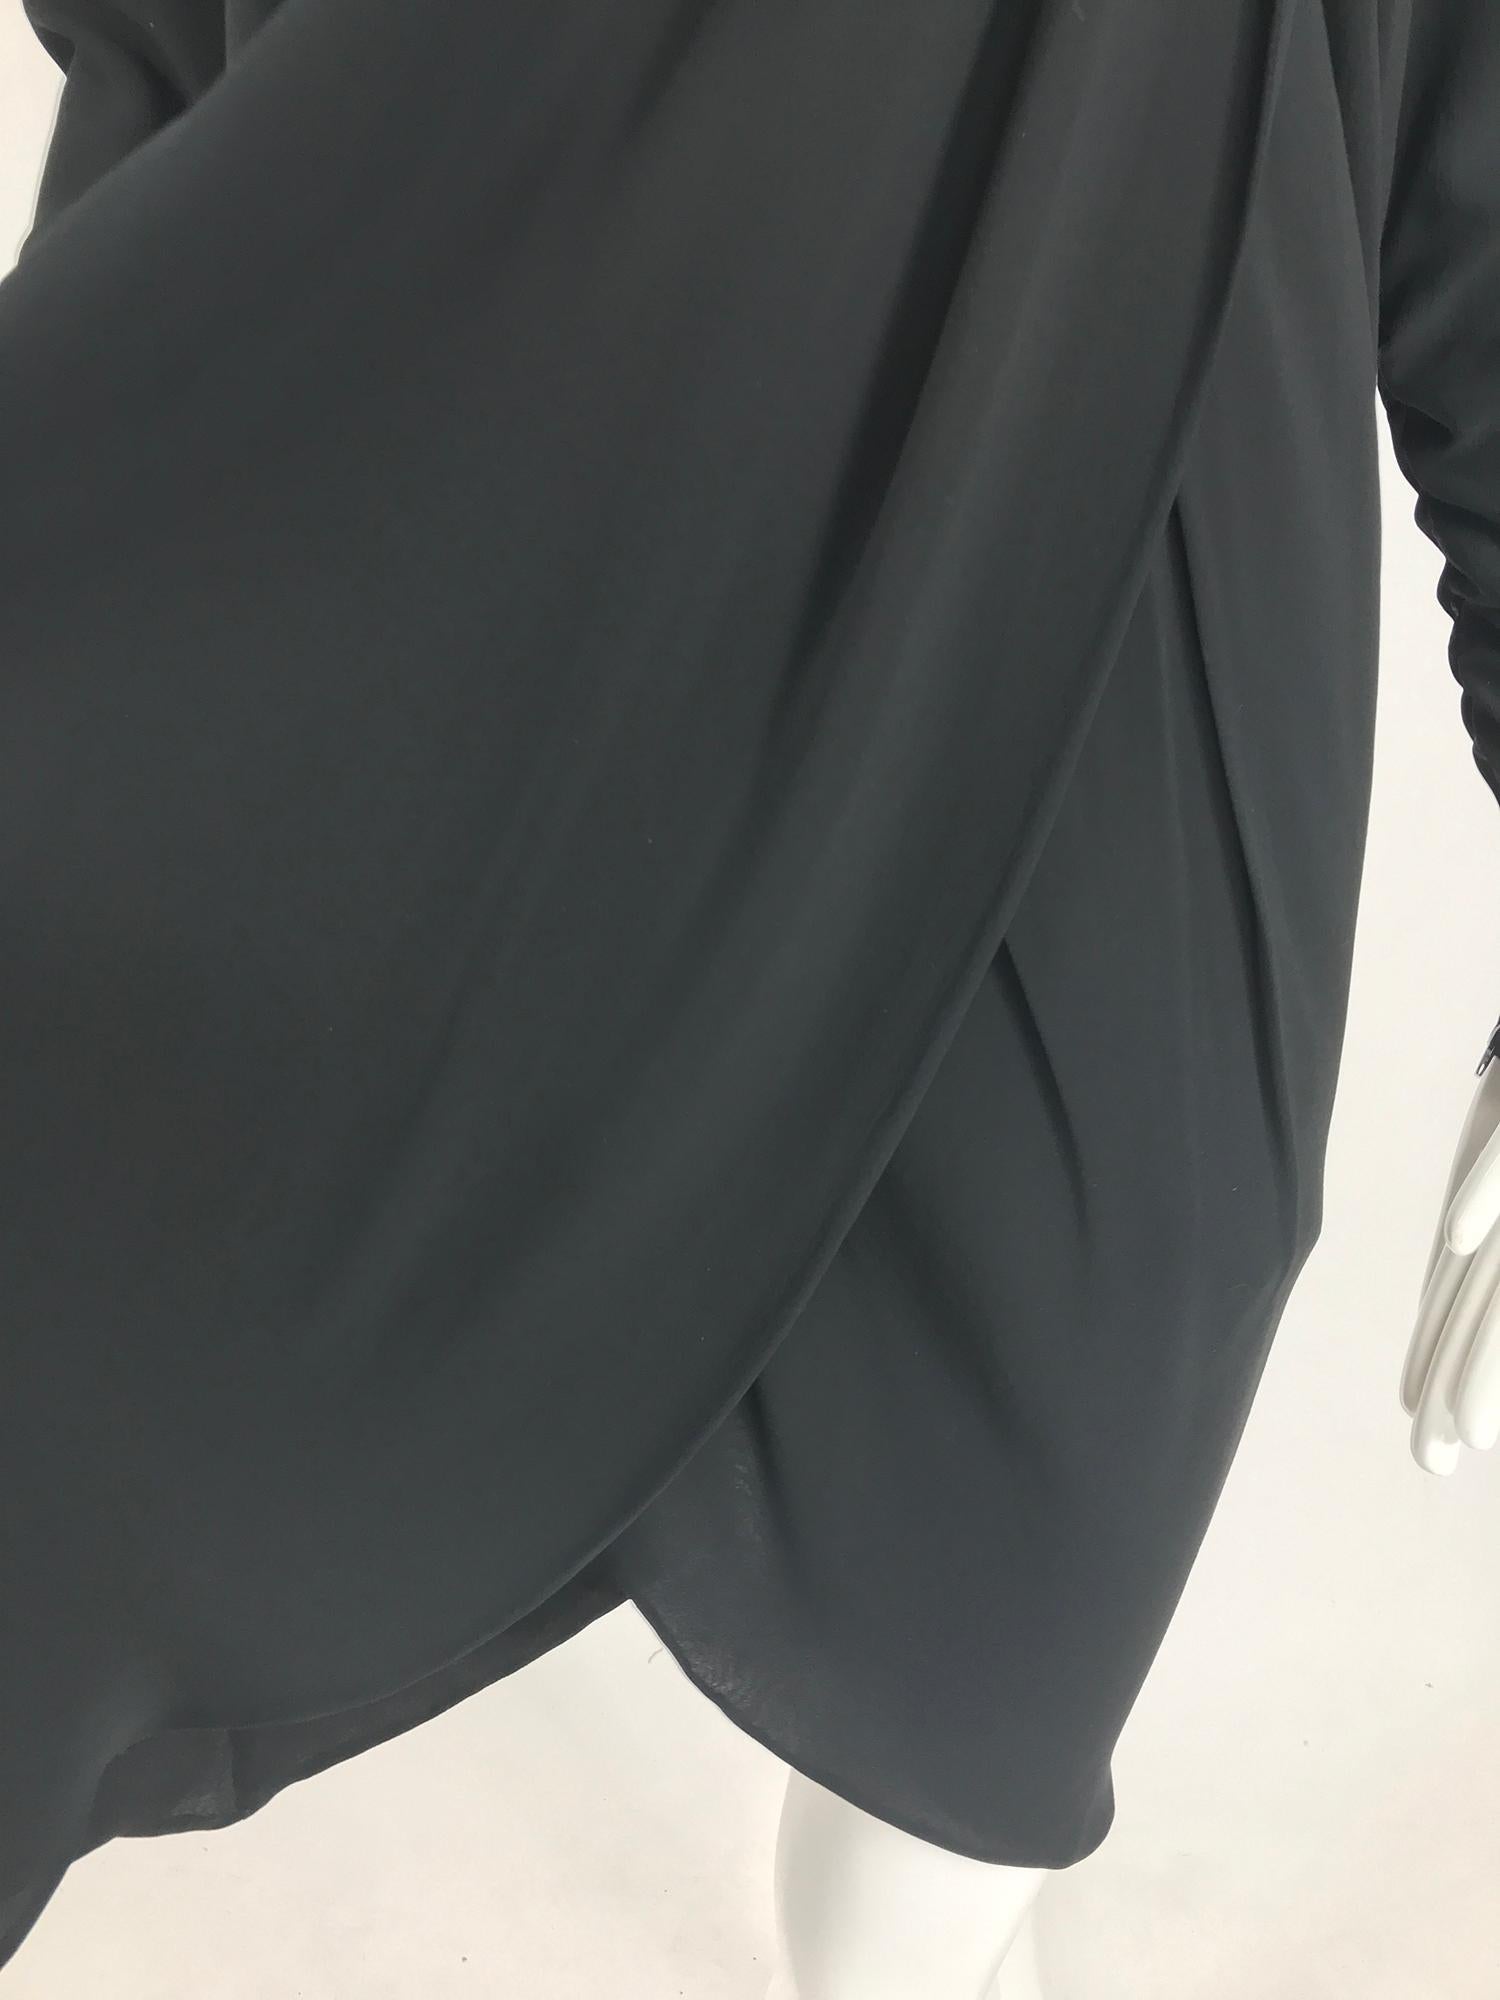 Yves Saint Laurent Black Peaked Shoulder Drape Wrap Dress 3